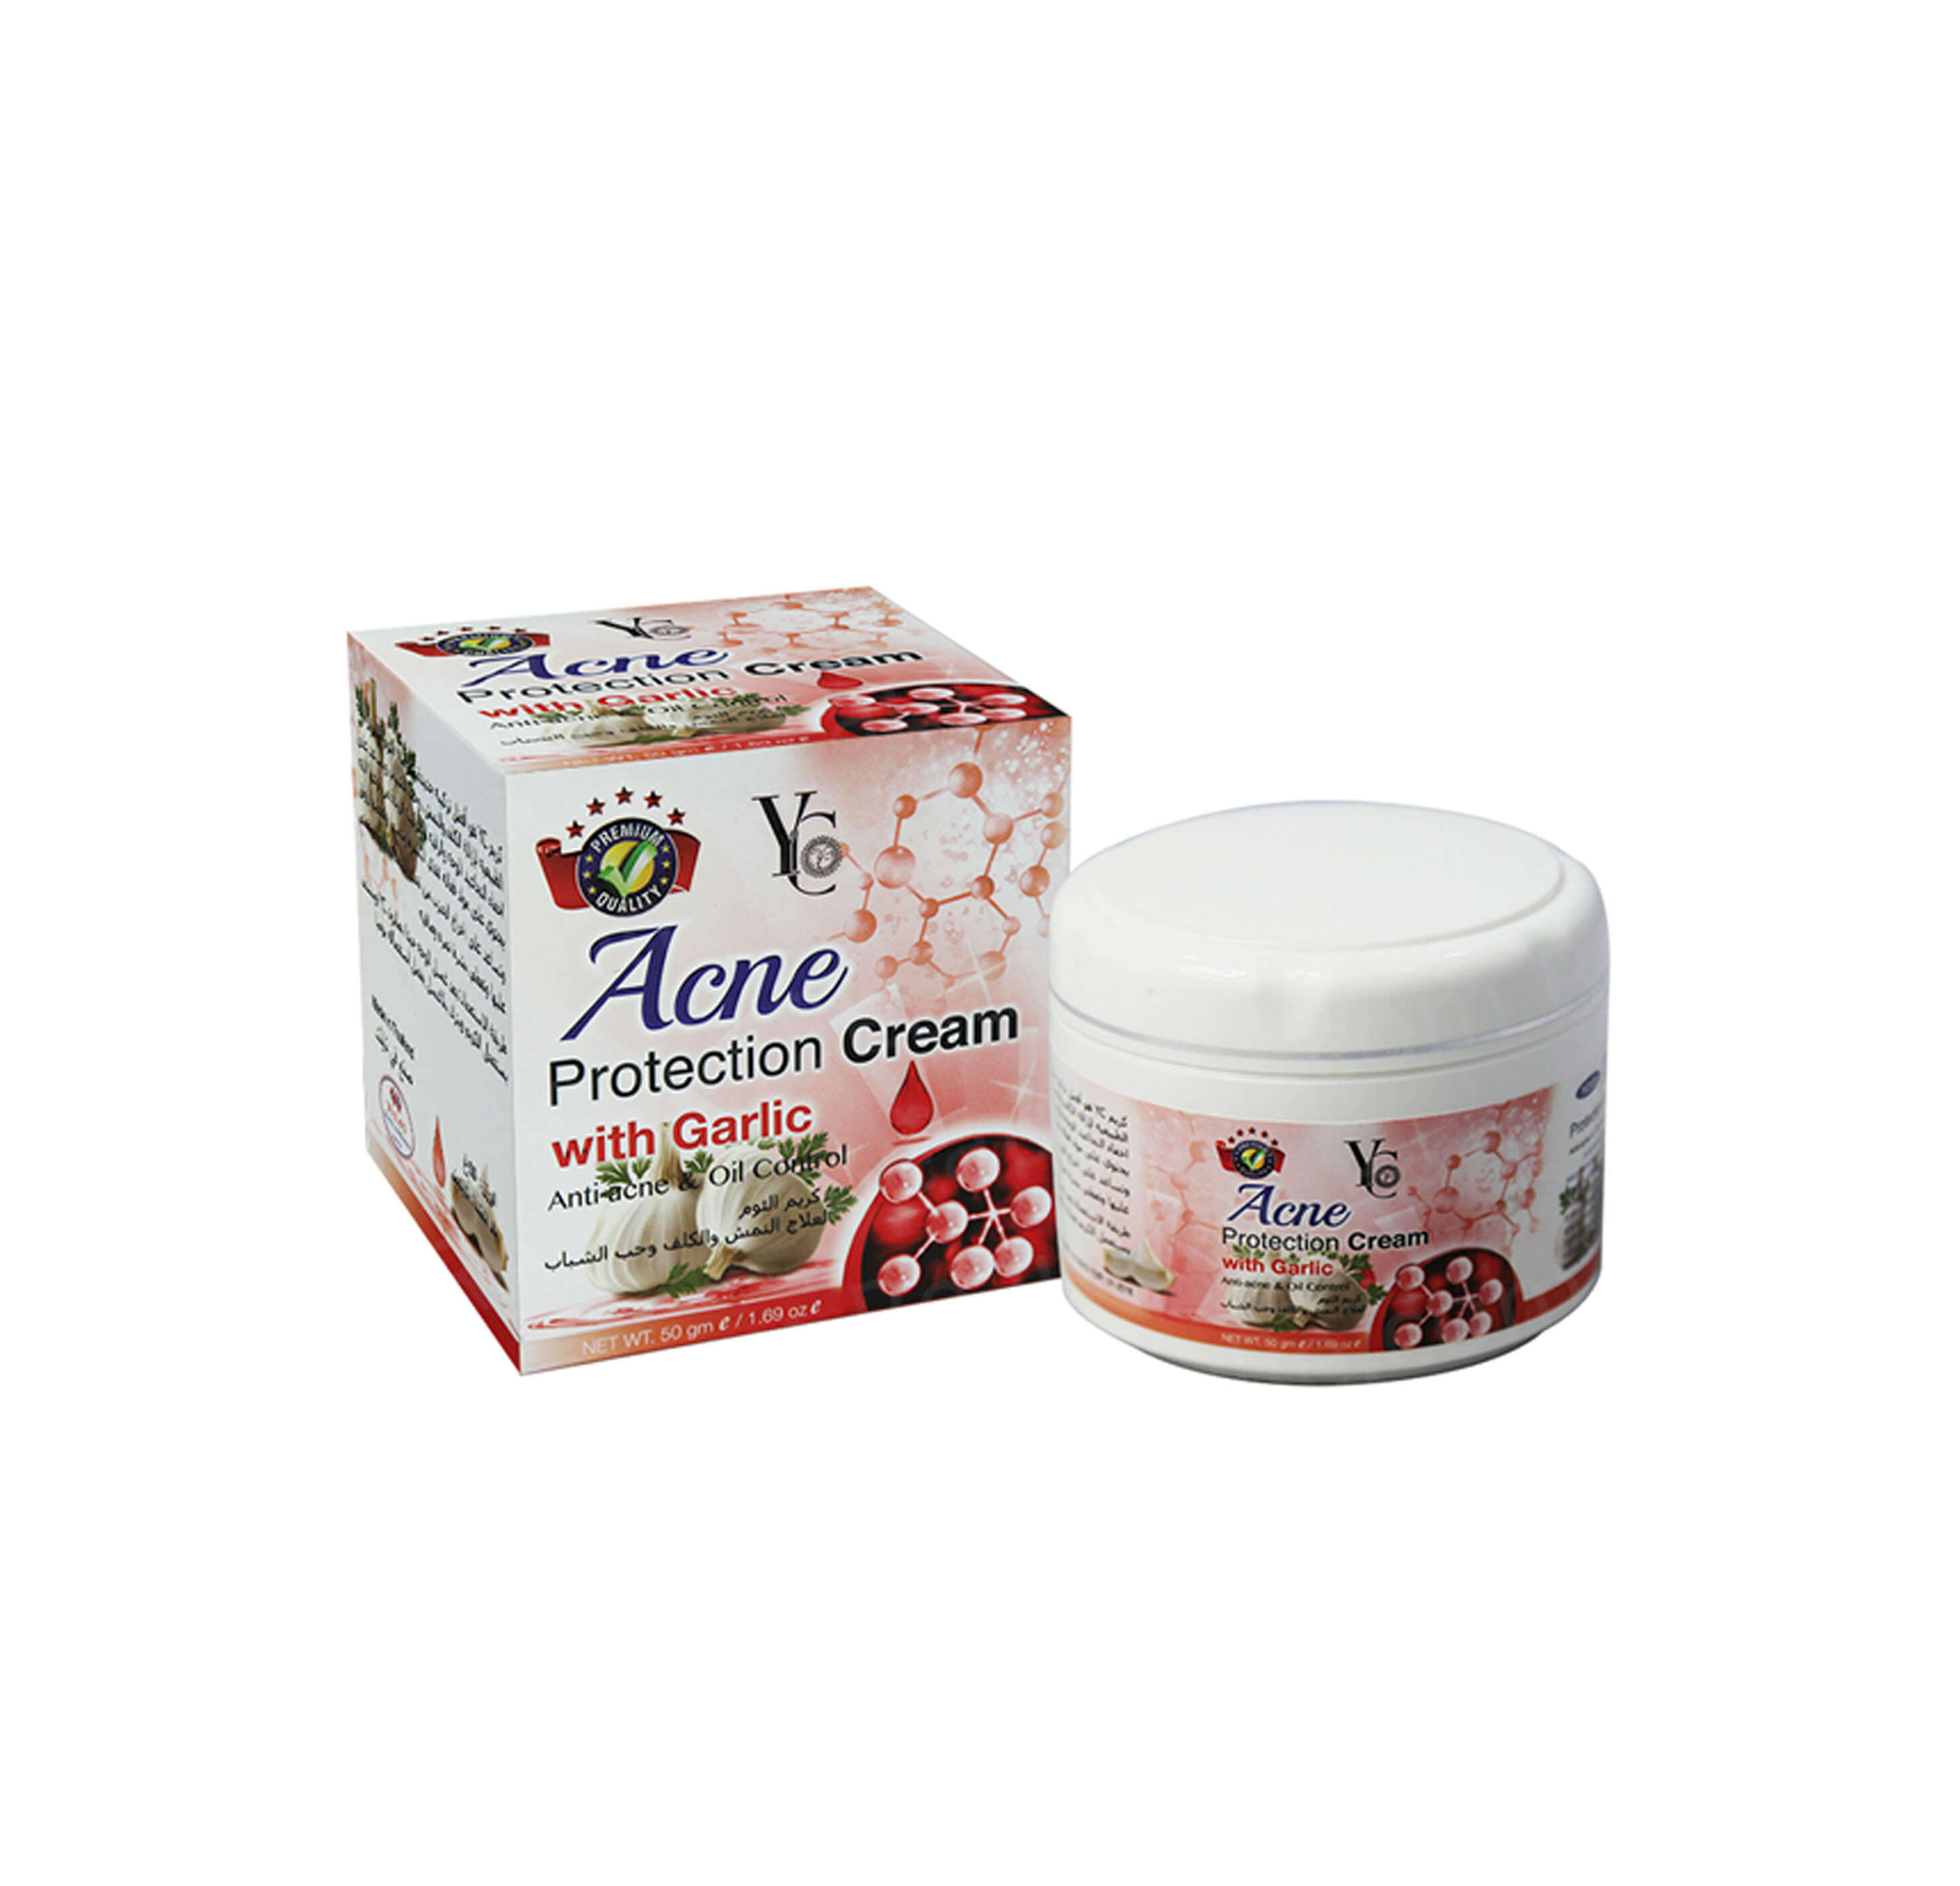 YC Aone Protection Cream with Garlic